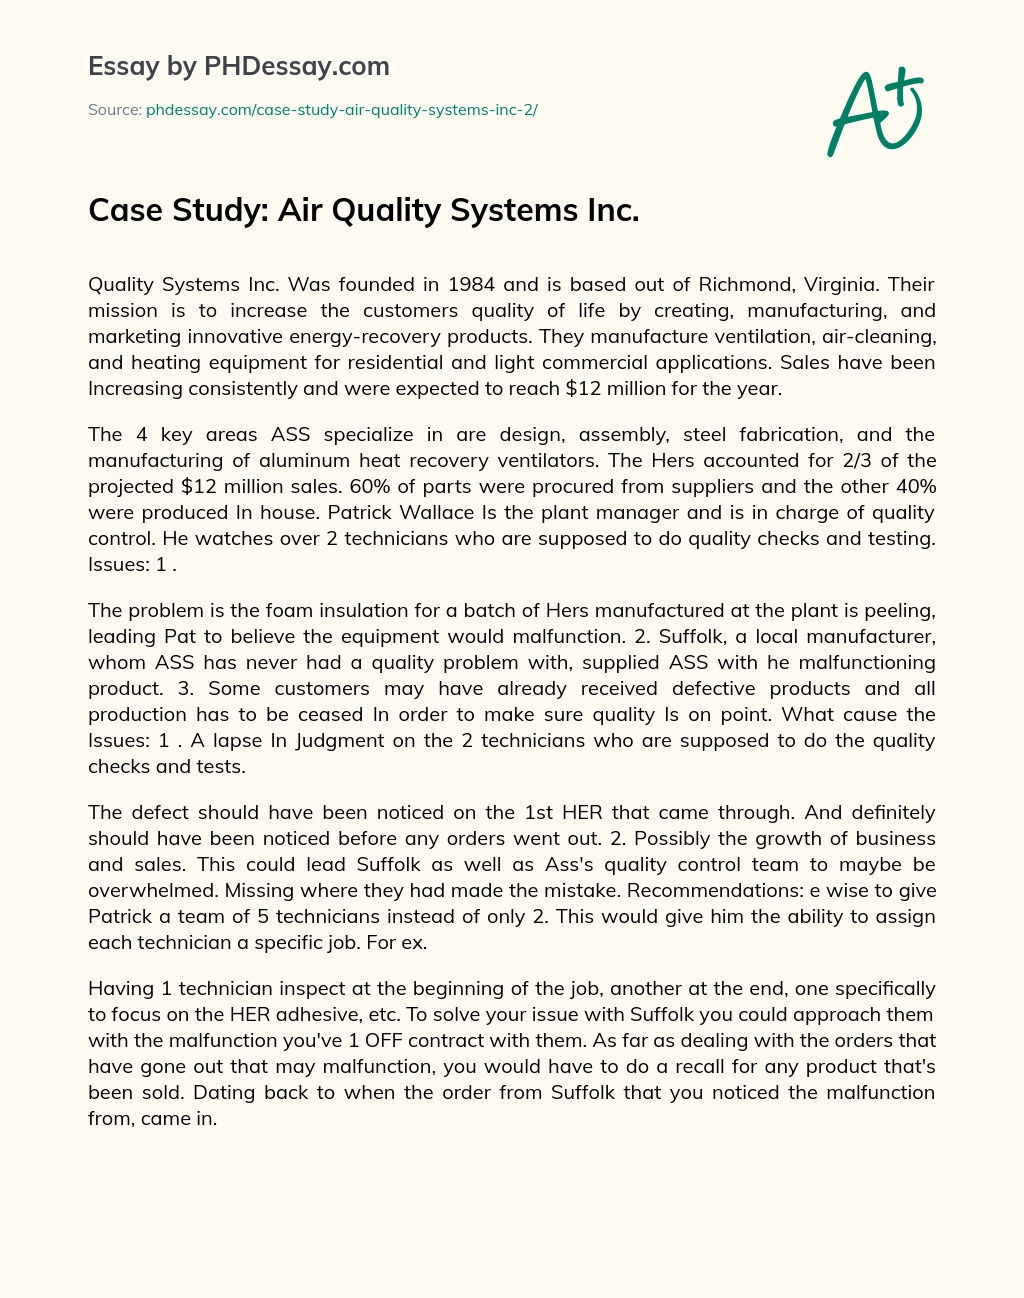 Case Study: Air Quality Systems Inc. essay